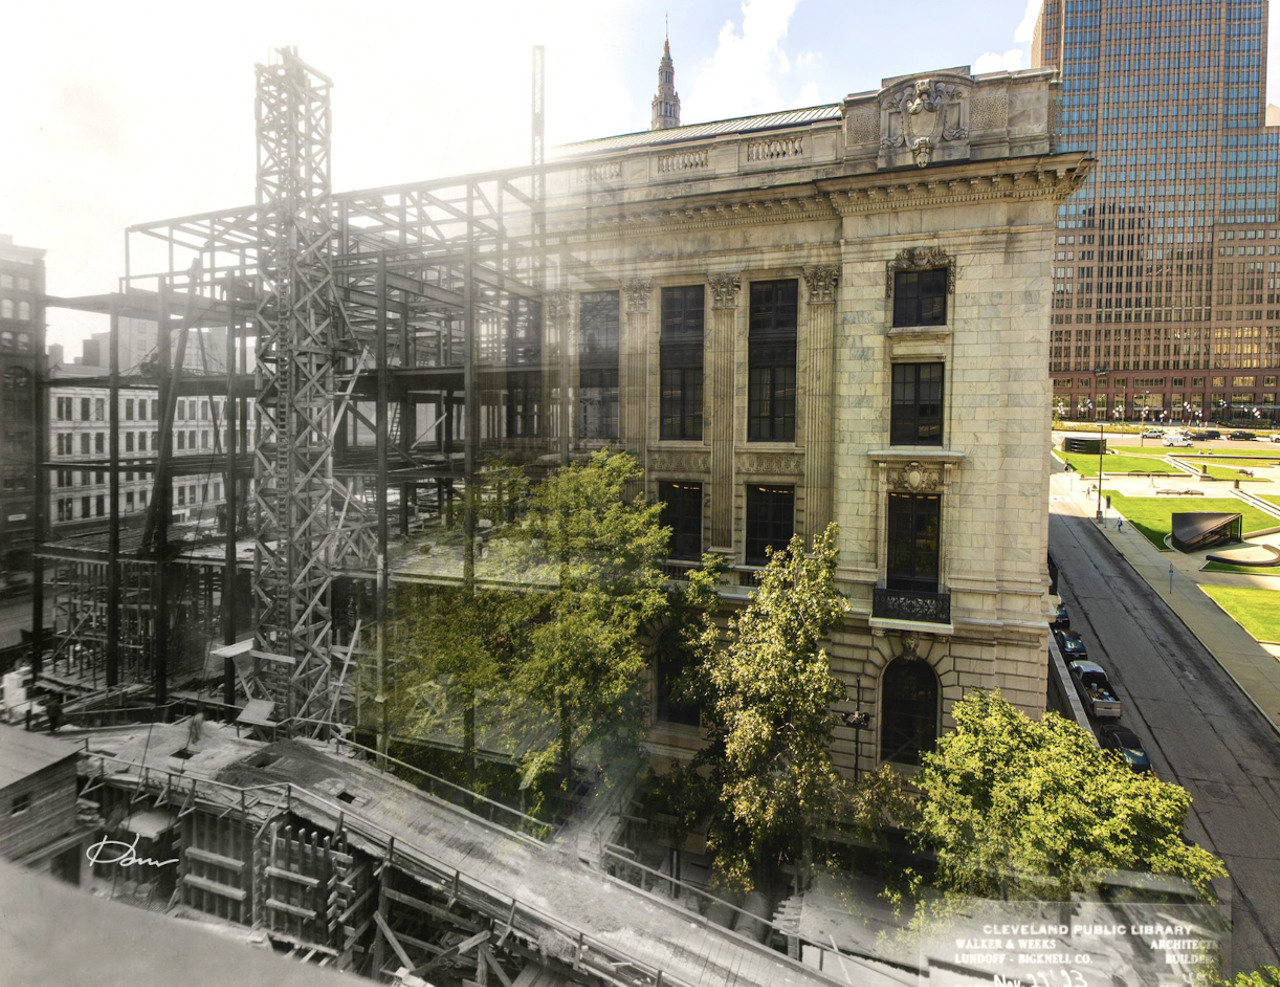 1923/2019 - Cleveland Public Main Library building under construction